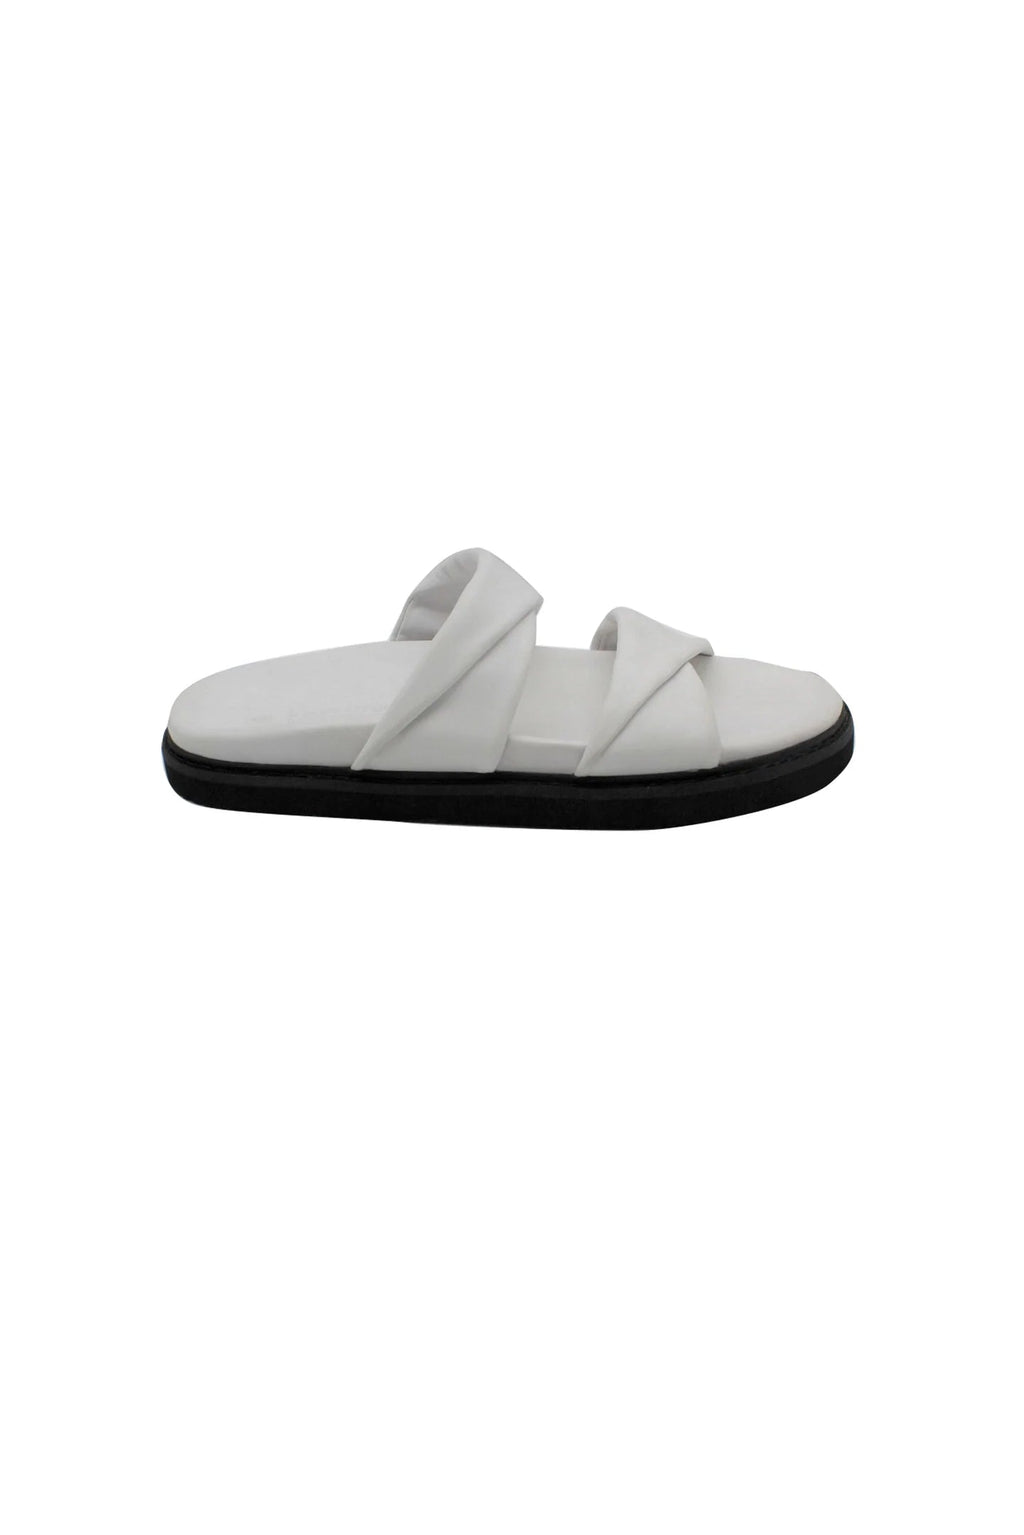 Ahoy Leather Sandal White/Black Shoes Human 